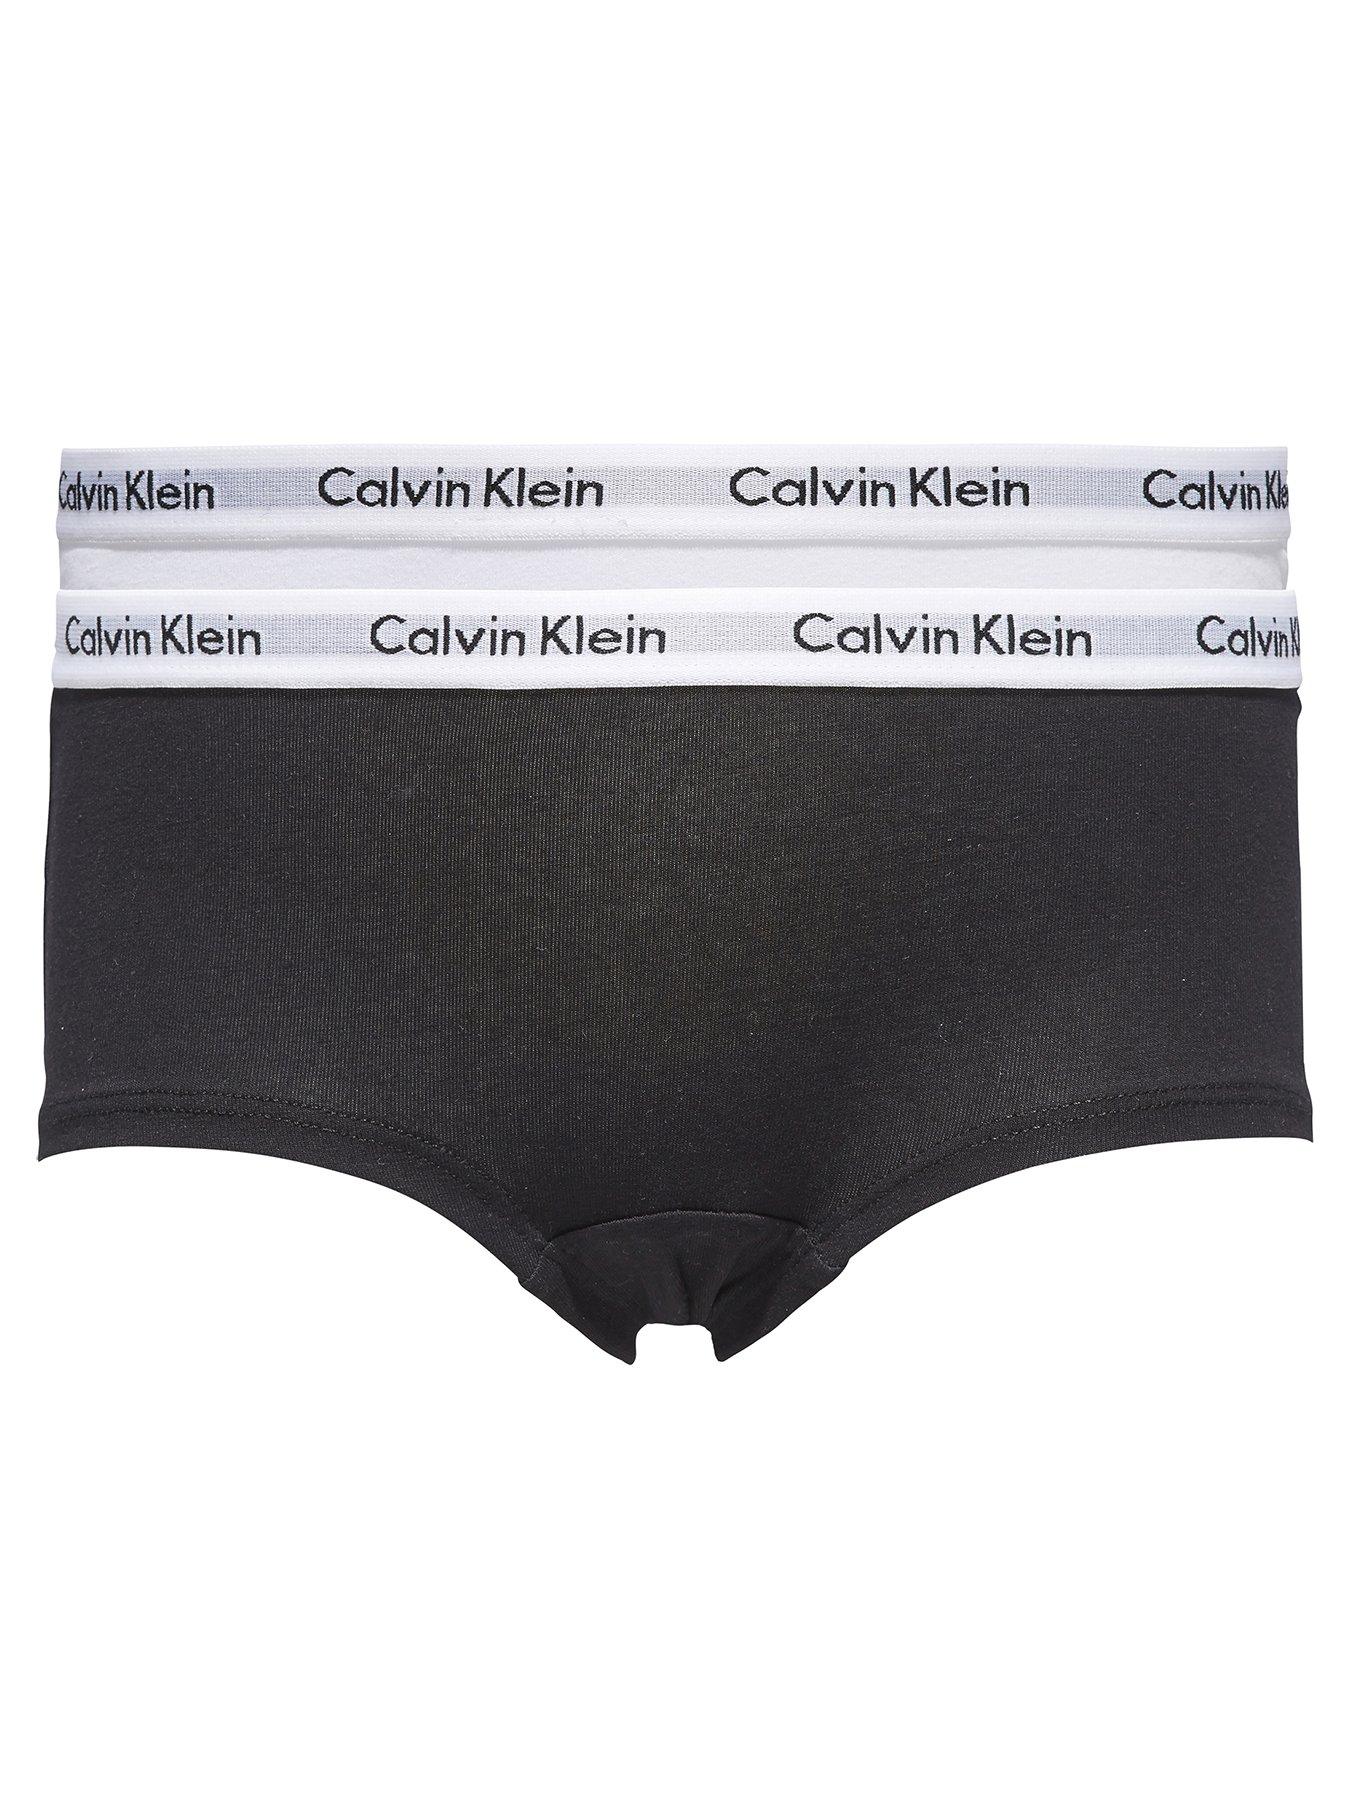 Calvin Klein Big Girls 2 Pack Hipster Underwear Panties Gray Black Large  10-12